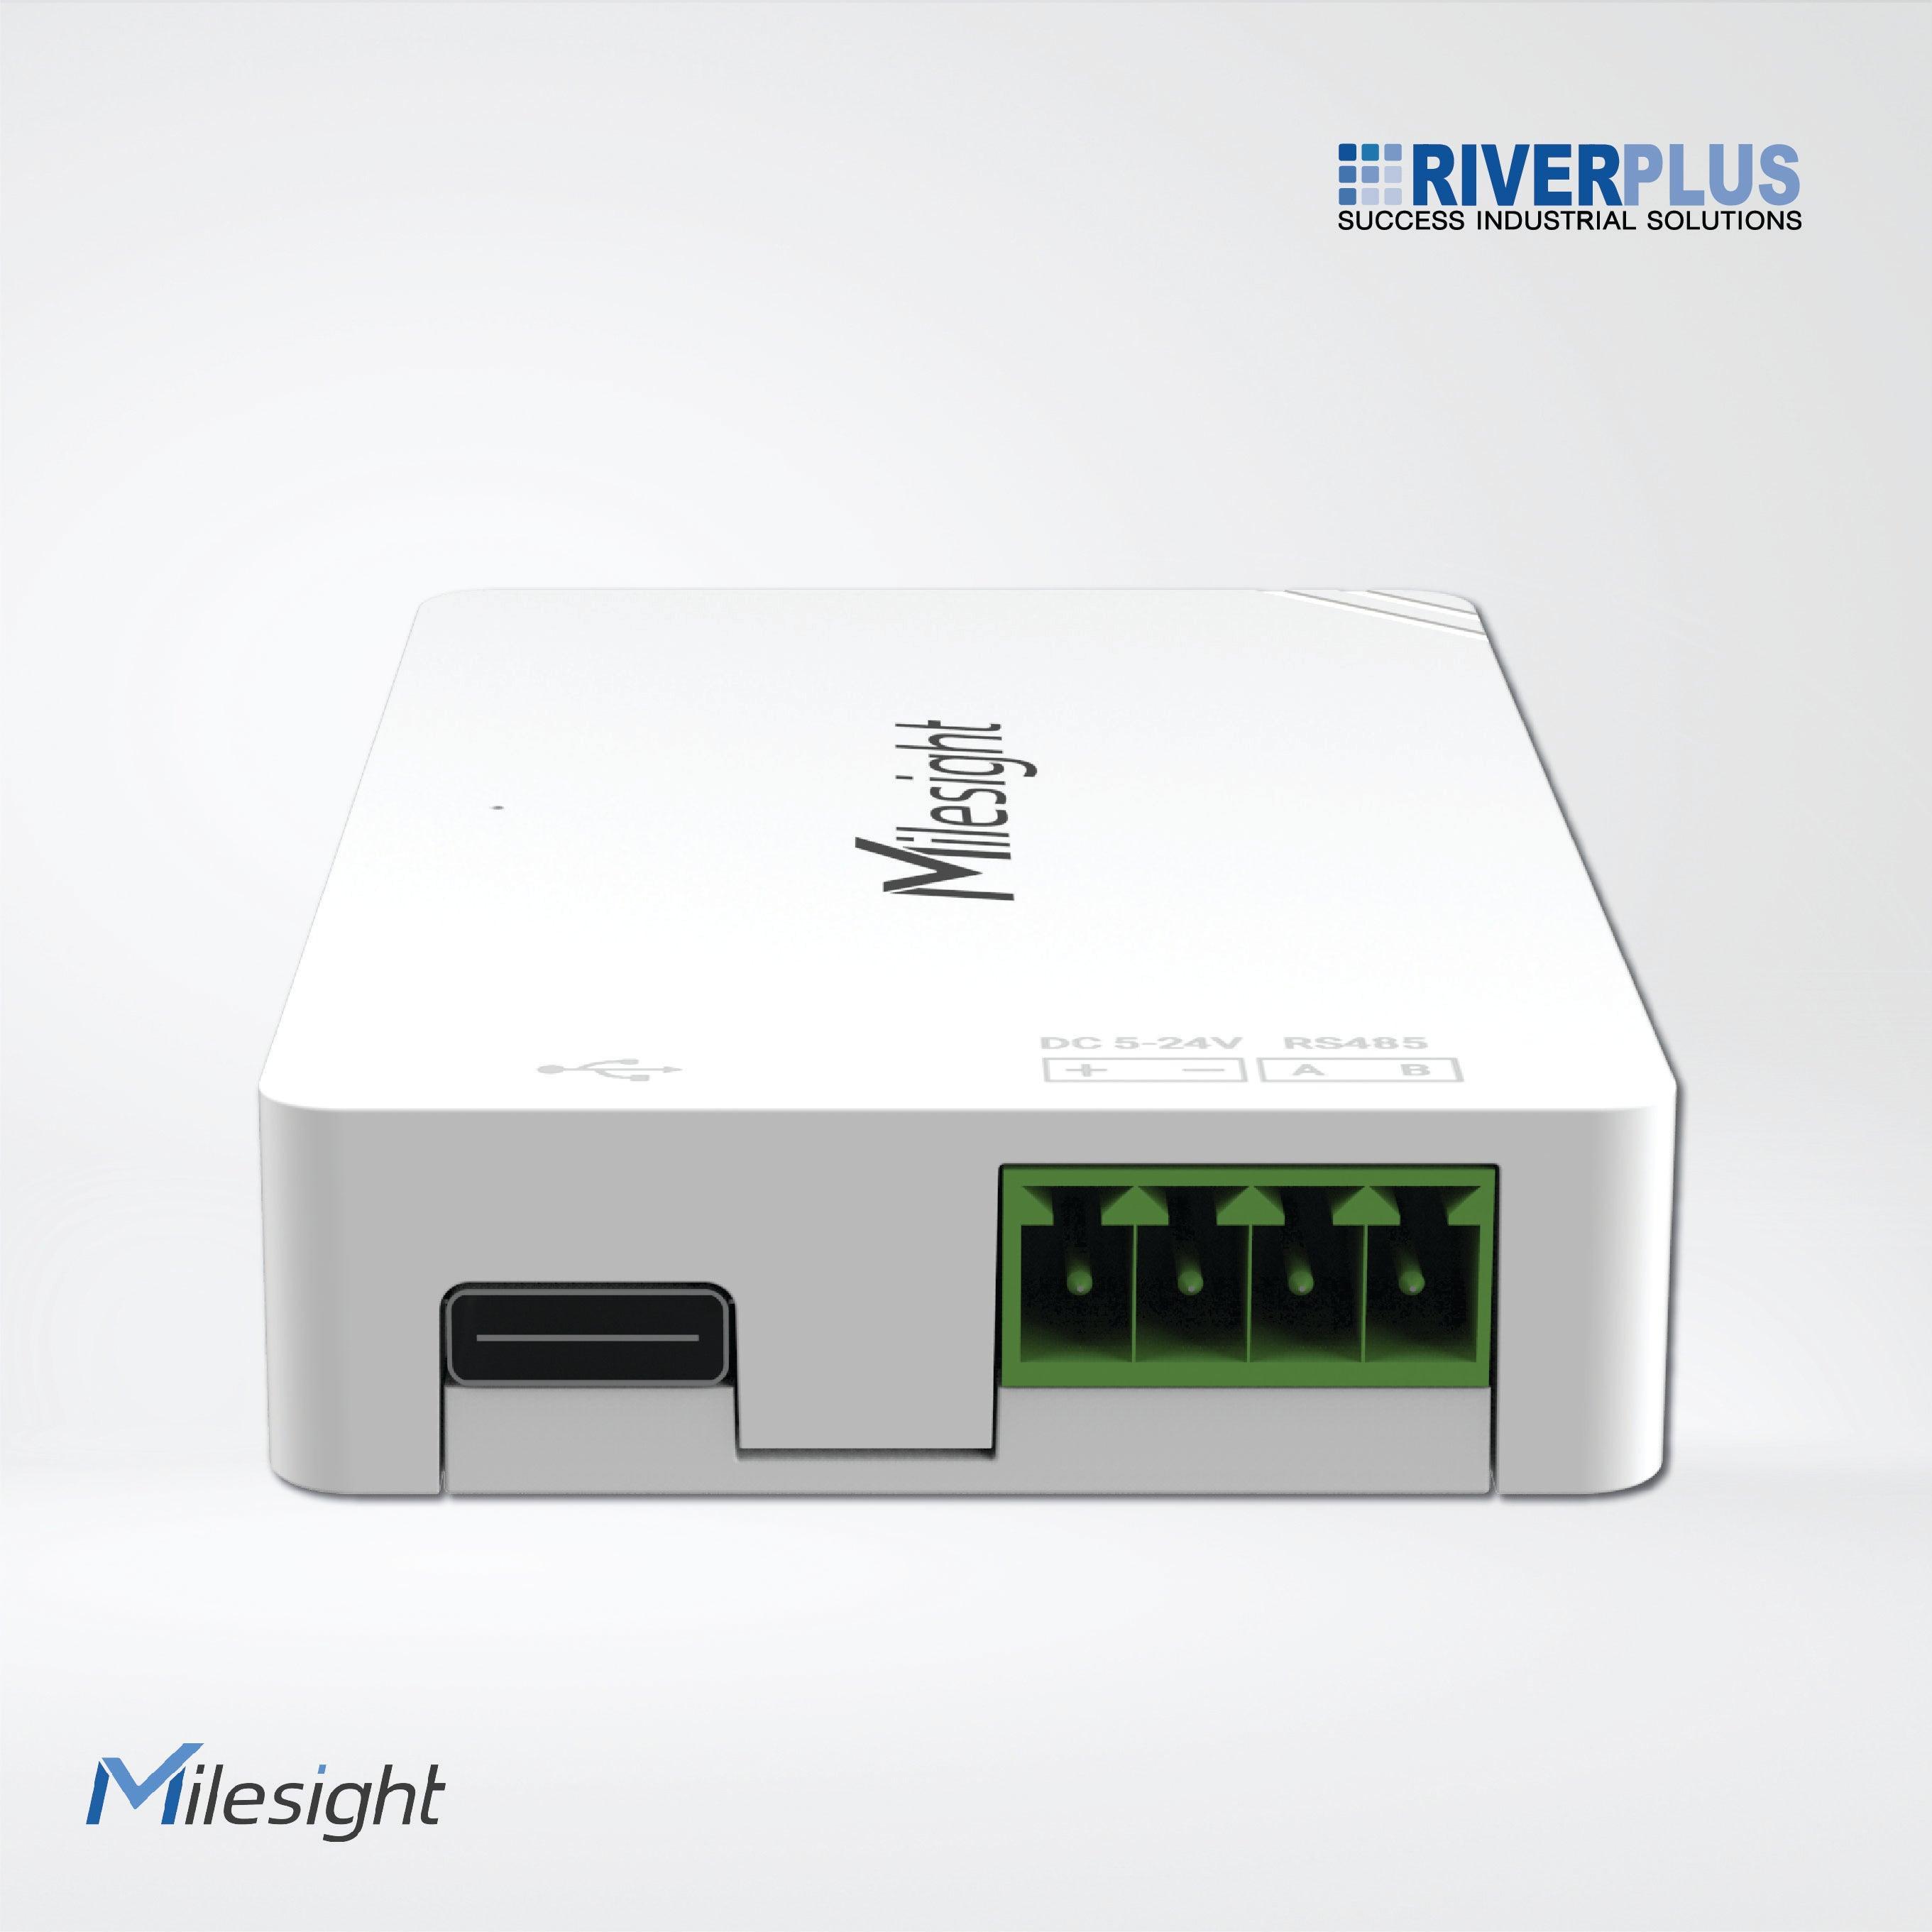 UC100 IoT Controller - Riverplus